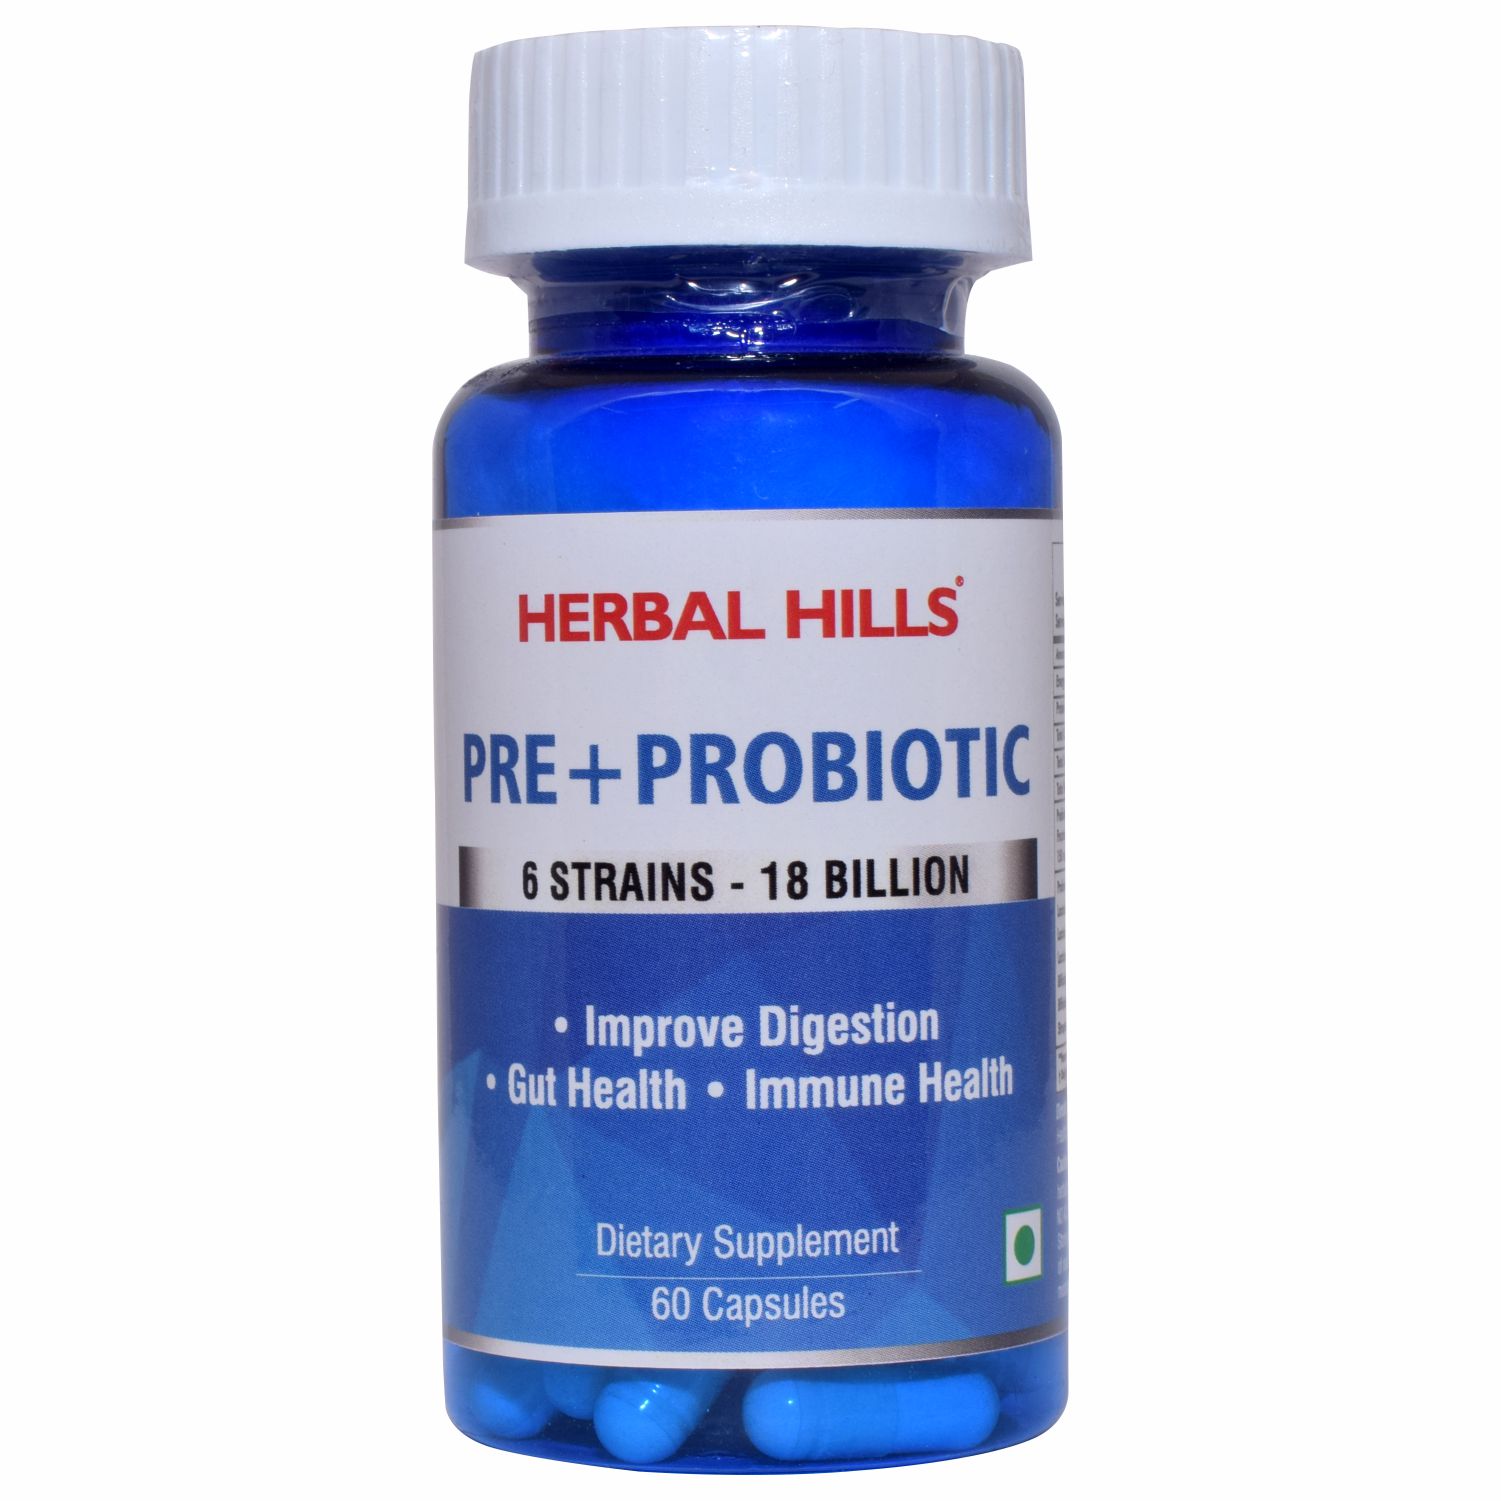 Buy Herbal Hills Pre & Probiotic 60 Capsules 18 Billion CFUs at Best Price Online